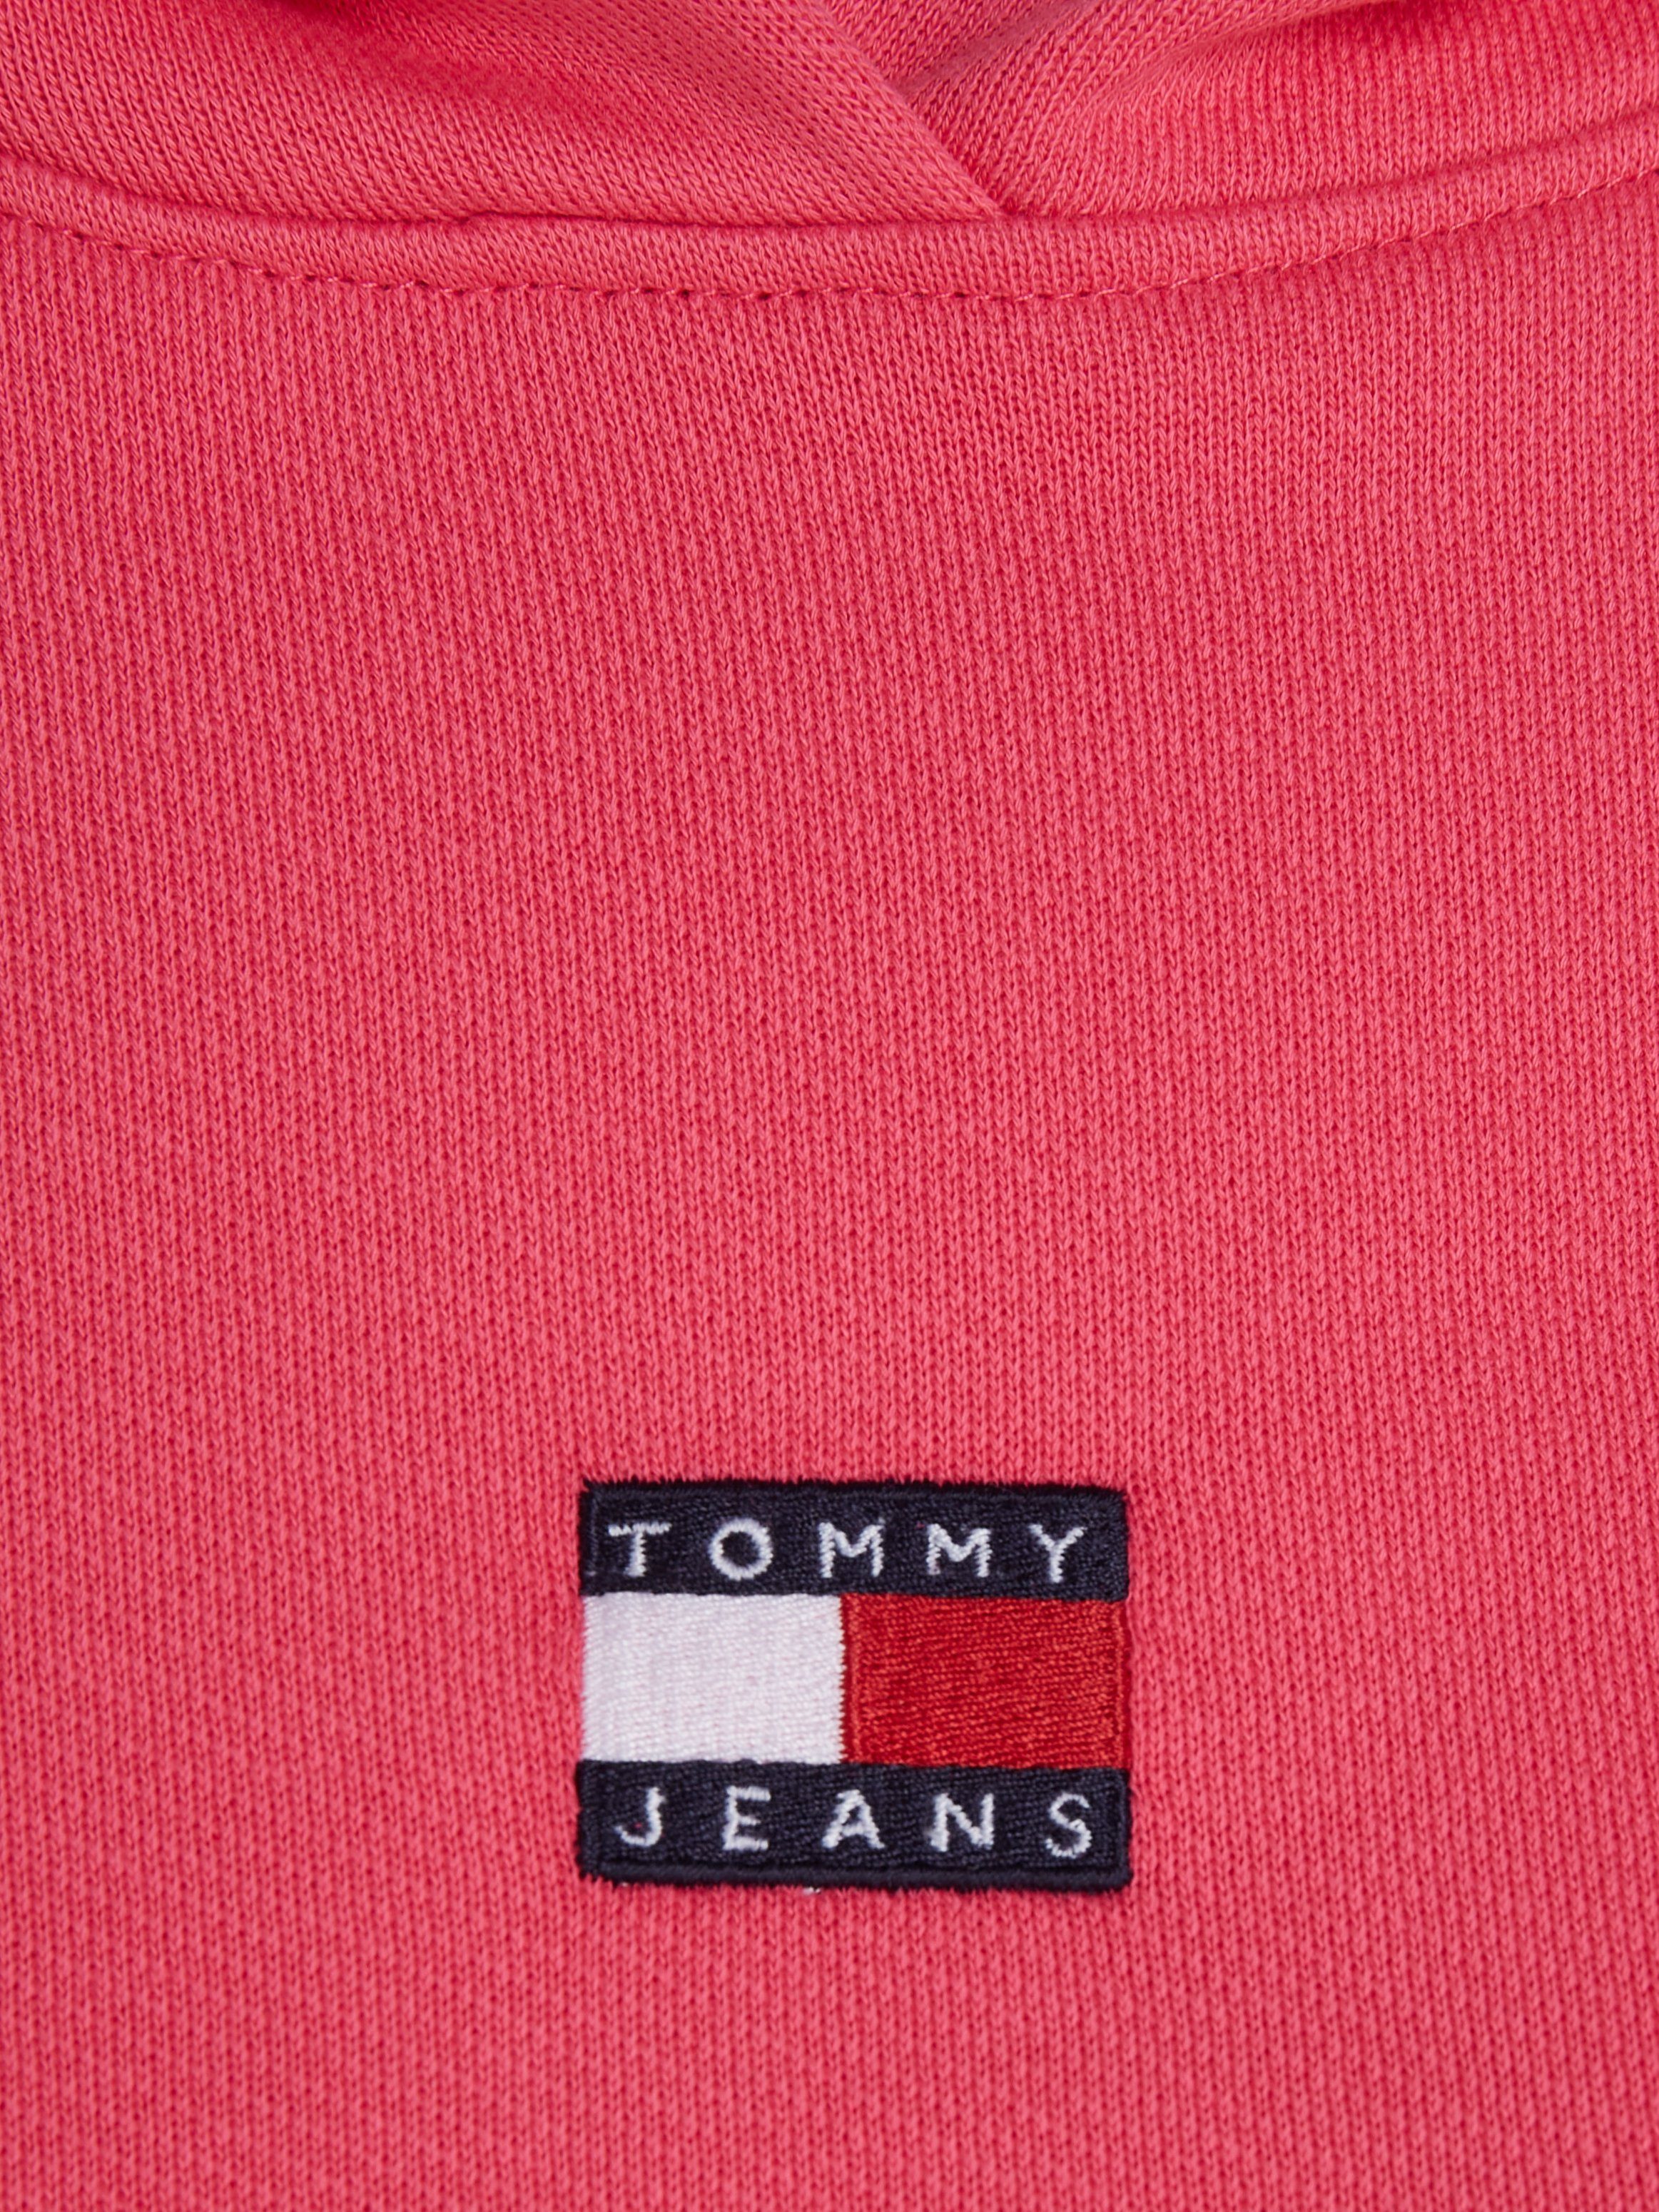 mit Jeans Pink Alert, Kängurutasche Kapuzensweatshirt Tommy